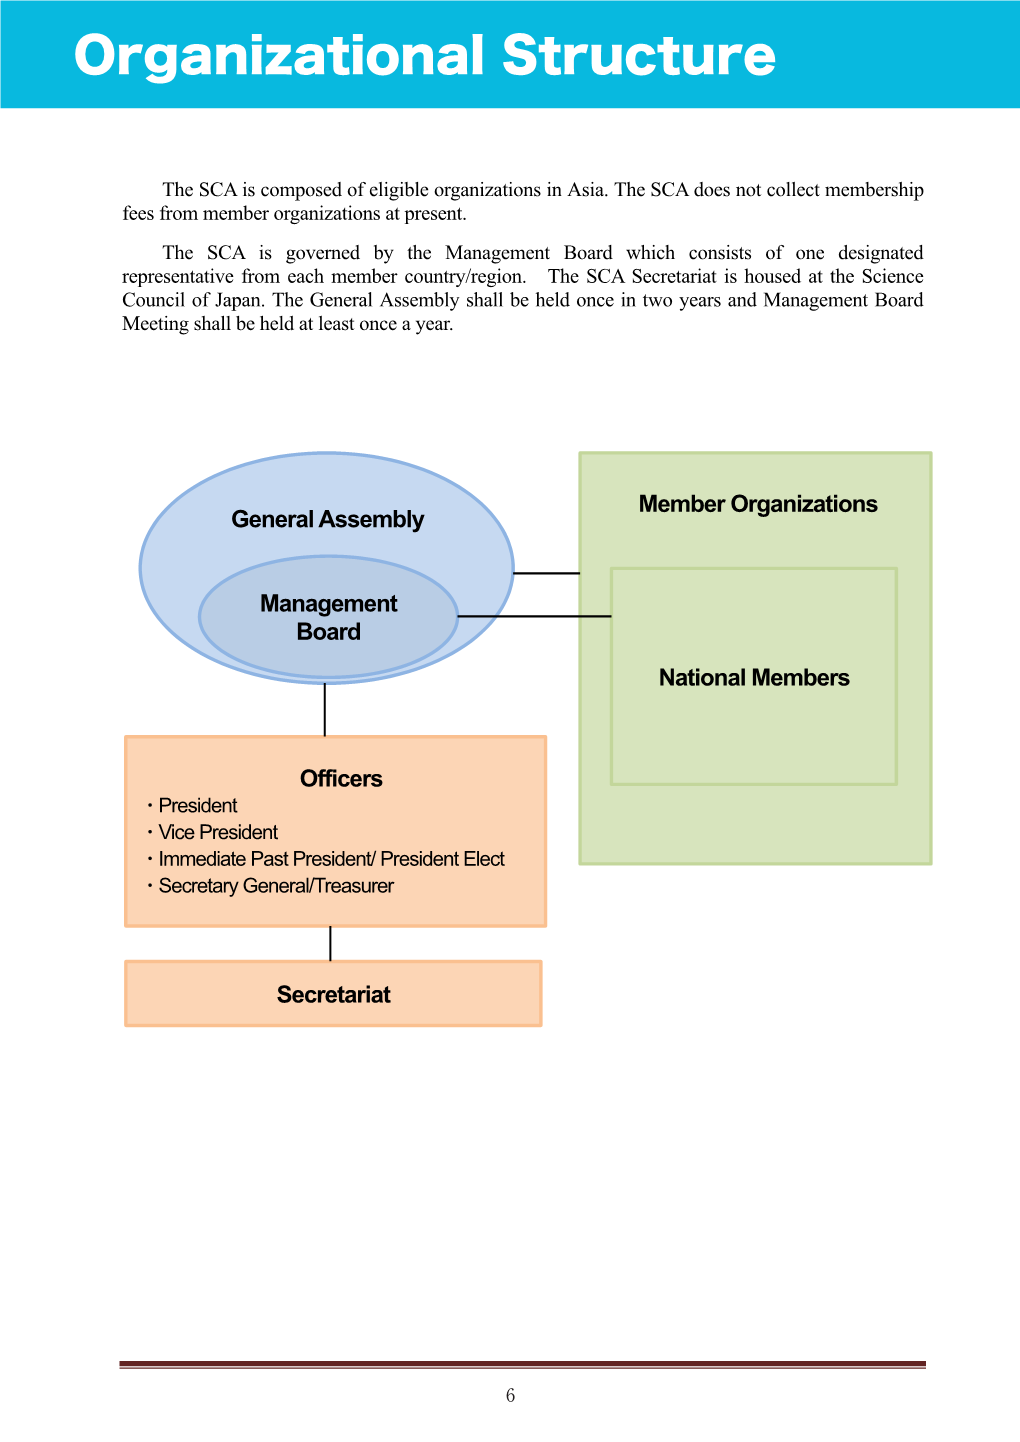 Organization Structure, Member Organization, Officers